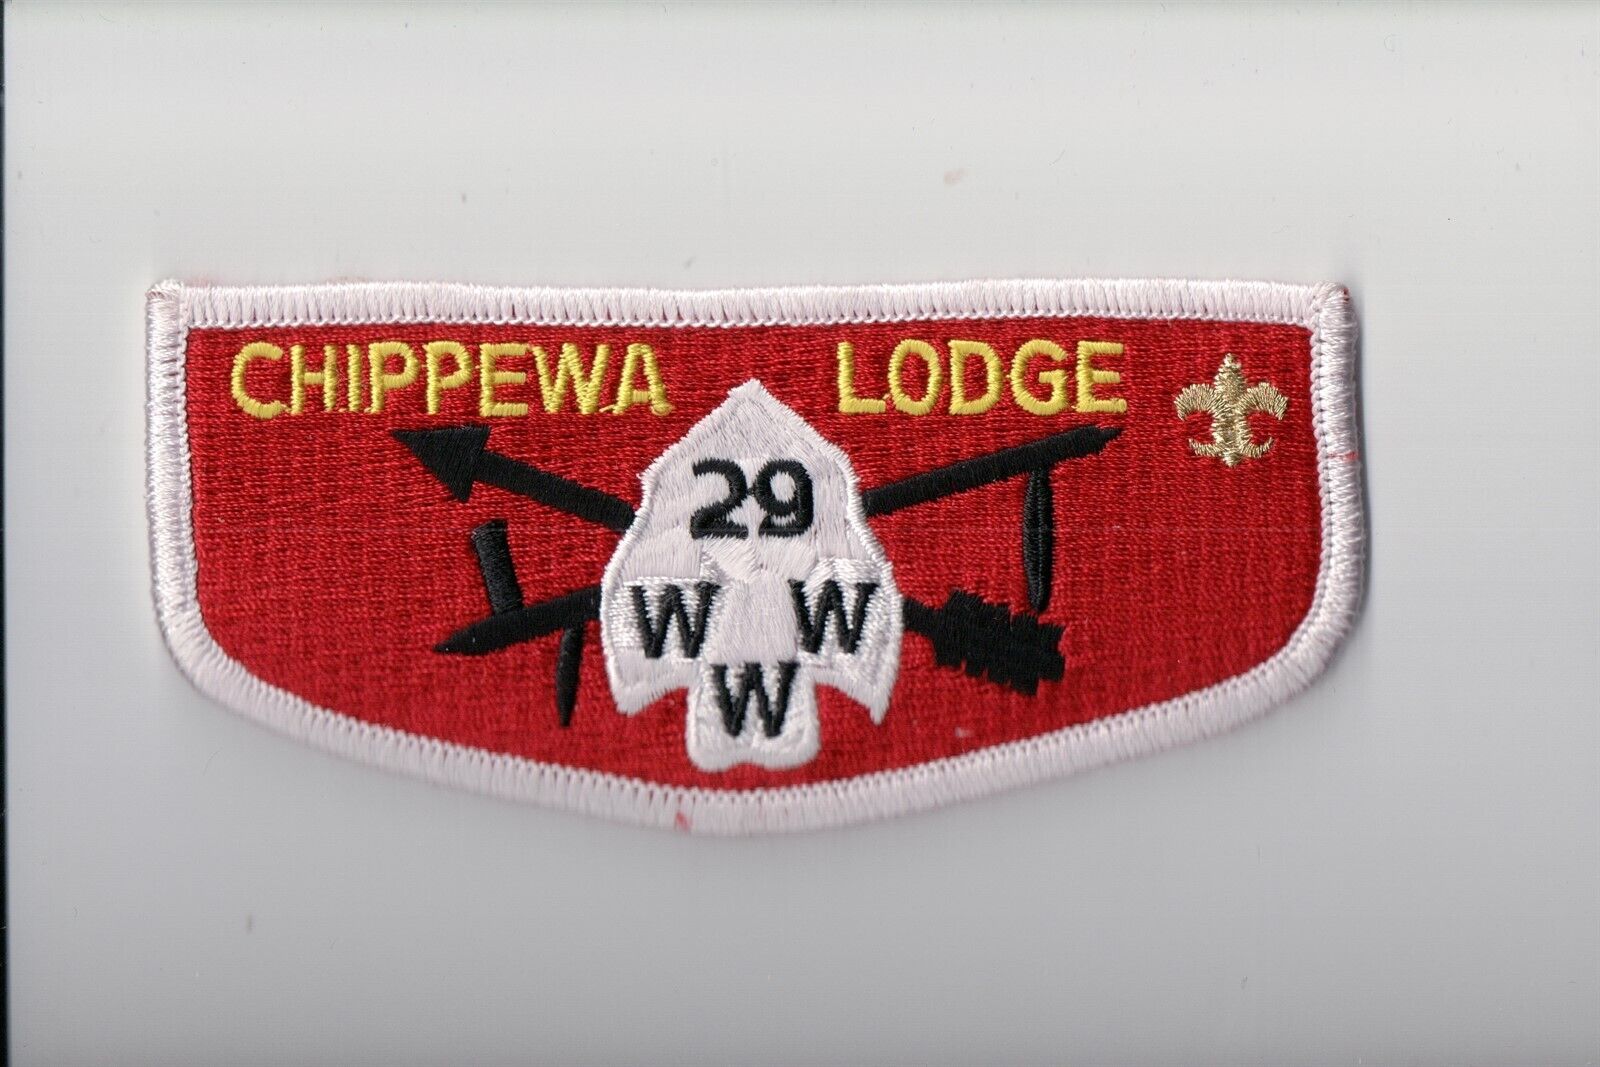 Lodge 29 Chippewa OA flap